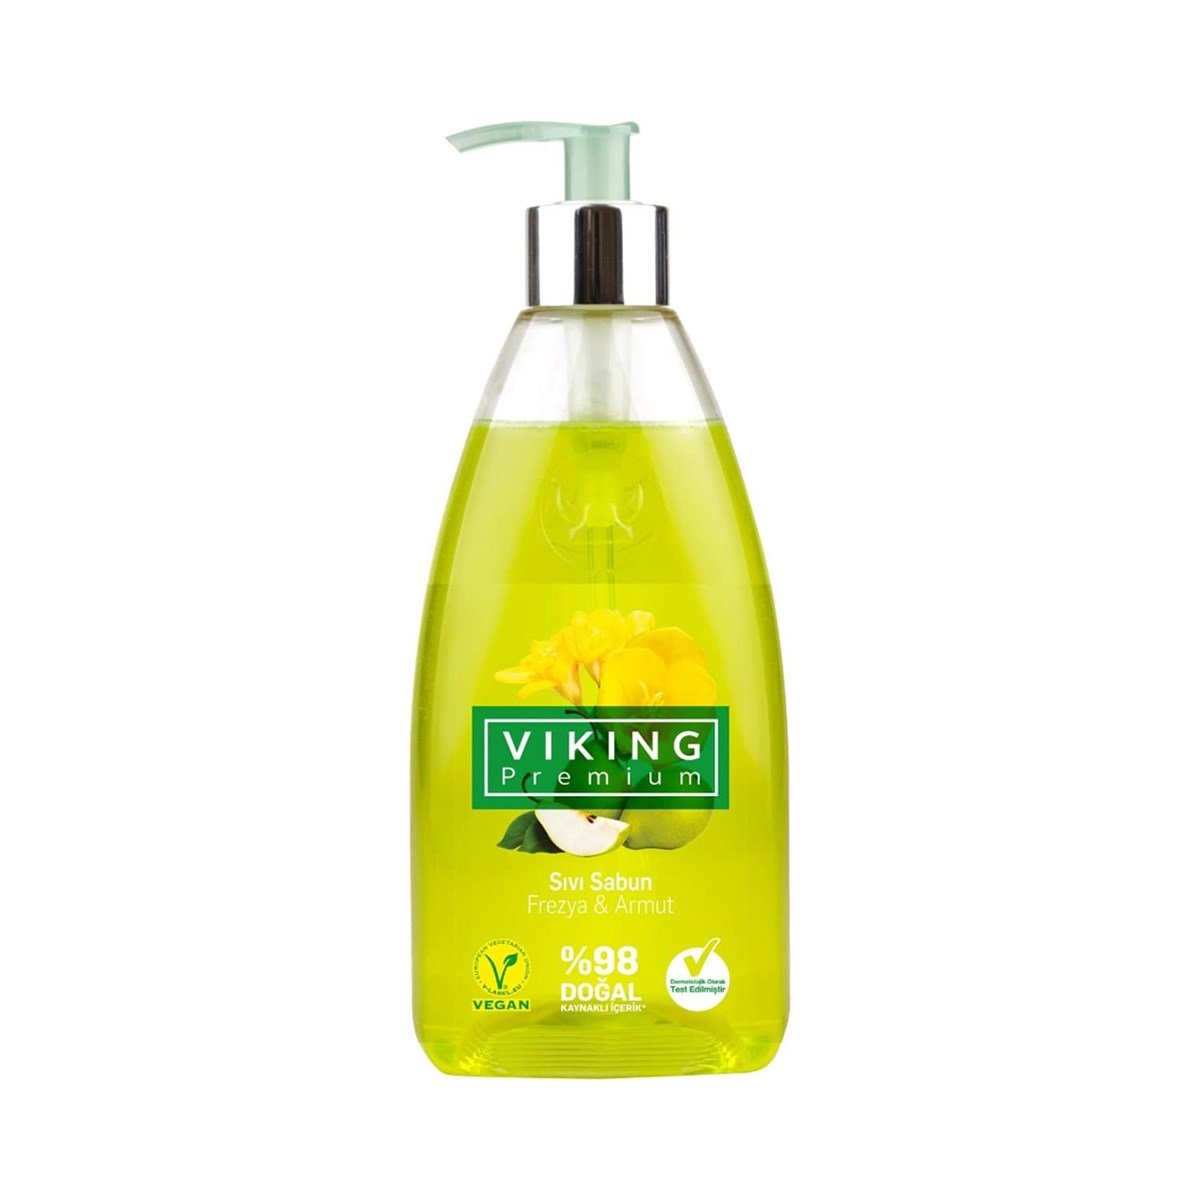 Viking Premium Sıvı Sabun Frezya & Armut (500 ml)